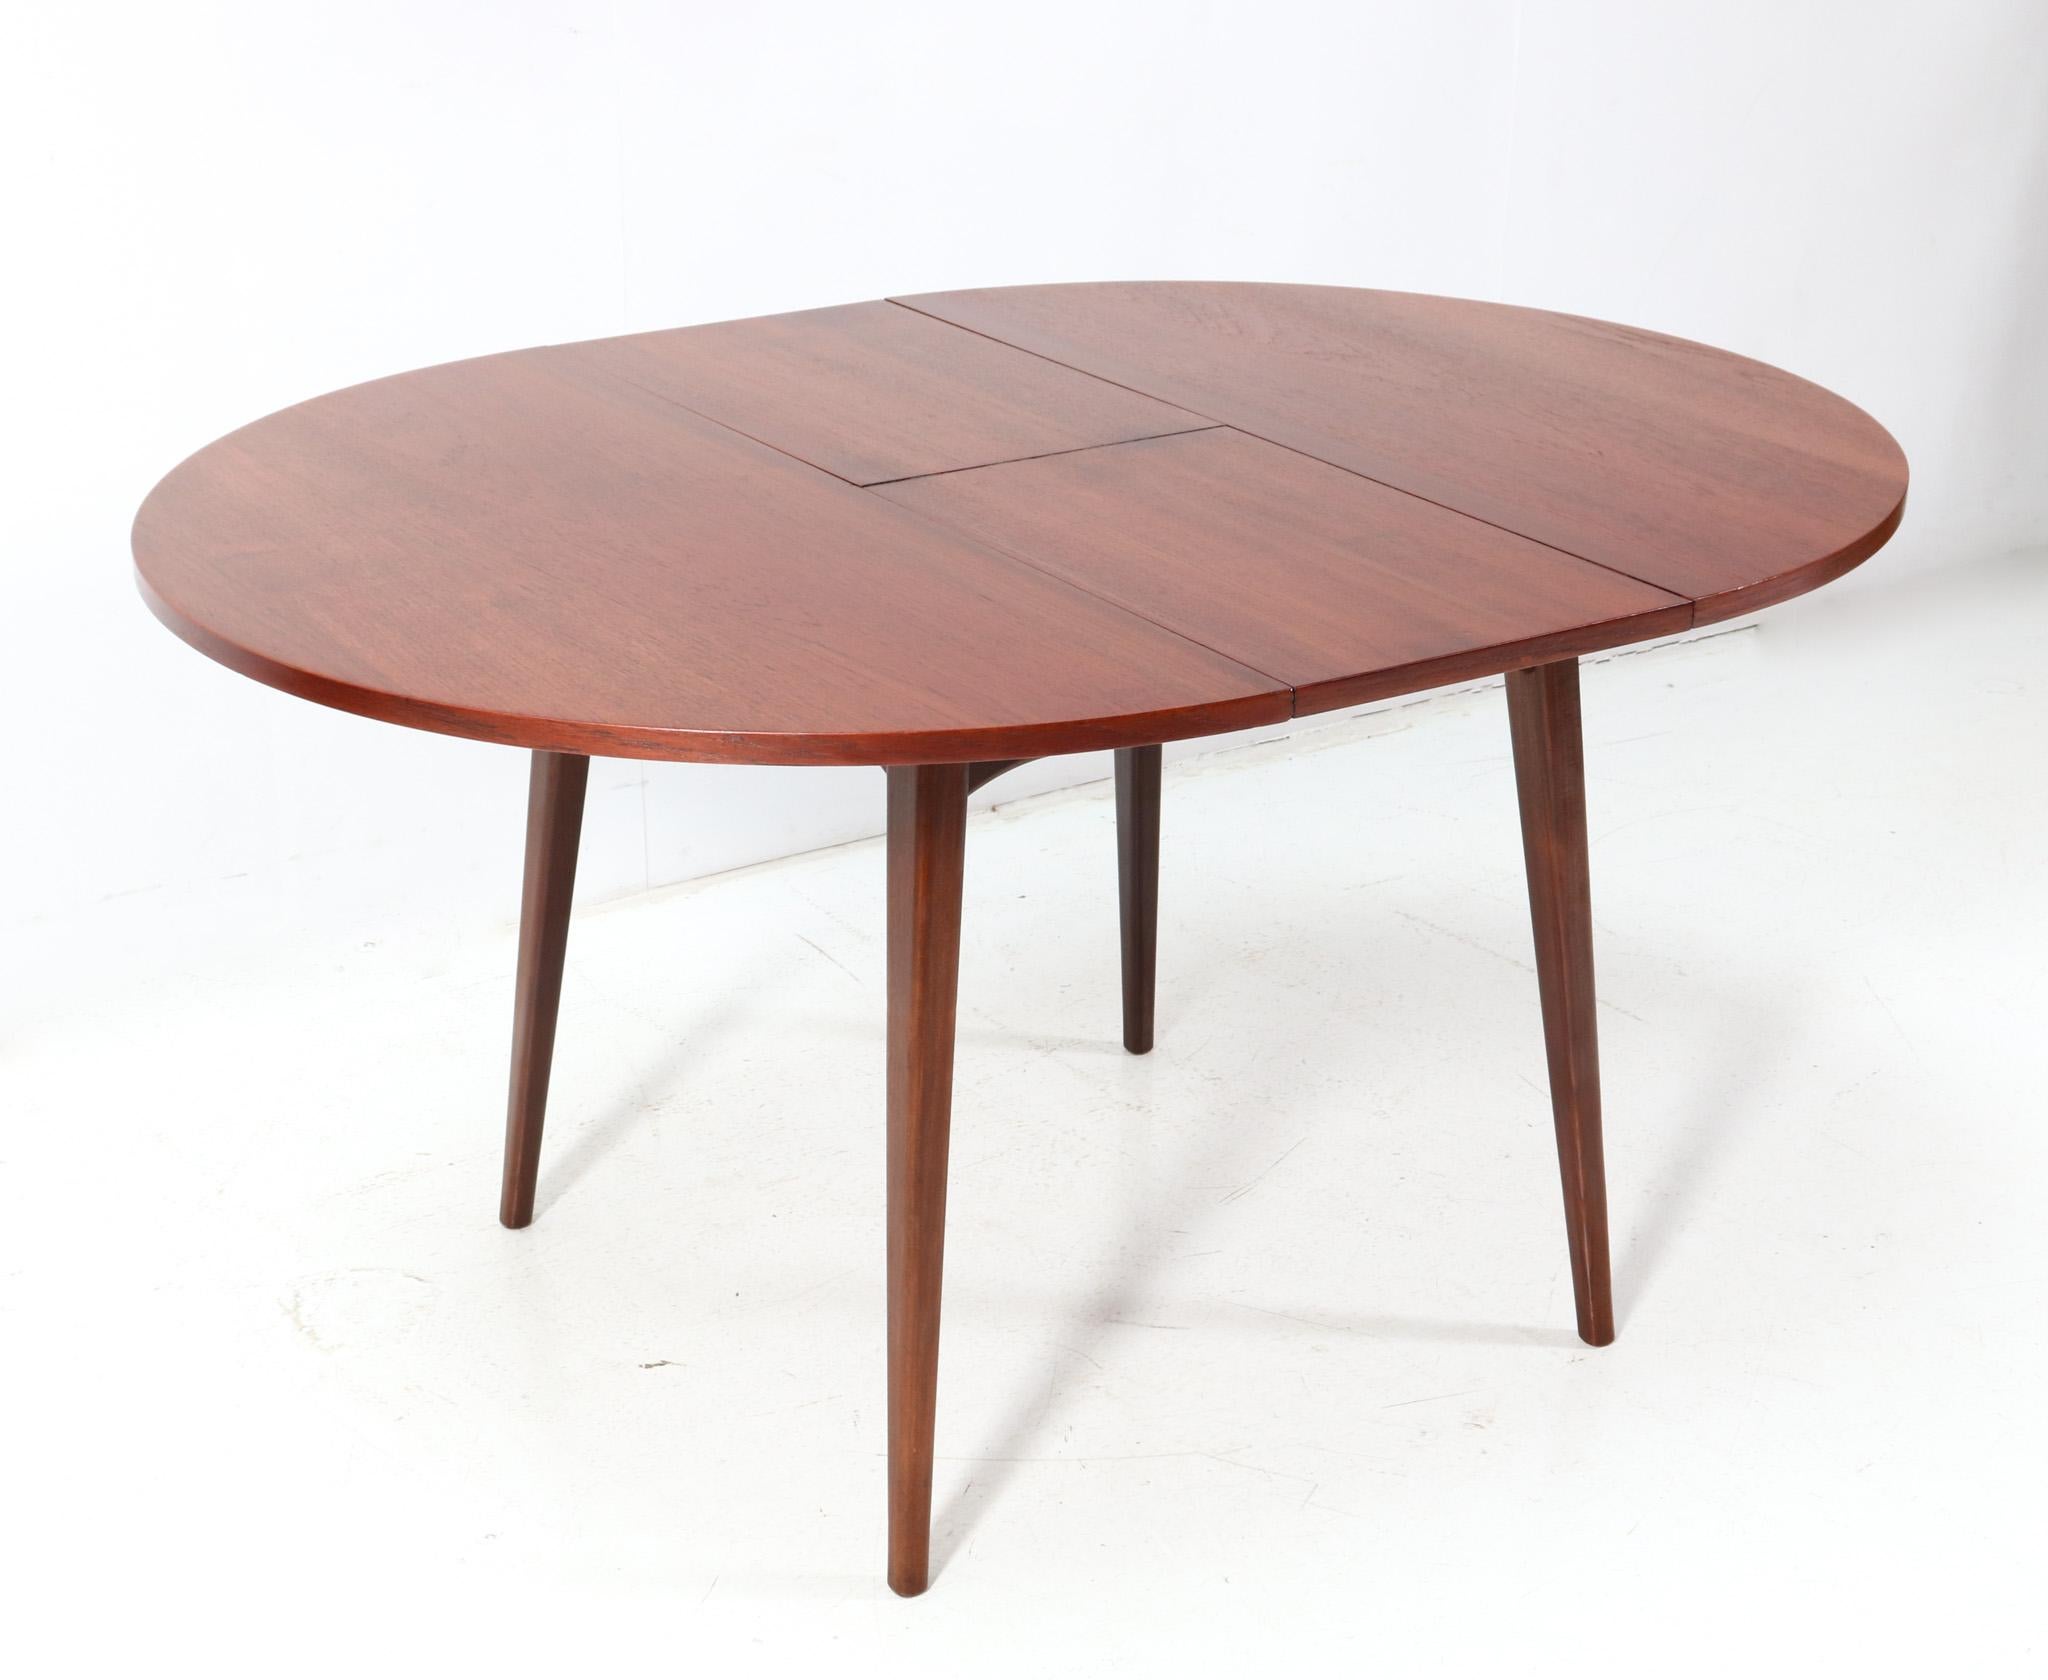 Teak Mid-Century Modern Extendable Dining Table by Louis van Teeffelen, 1950s For Sale 4